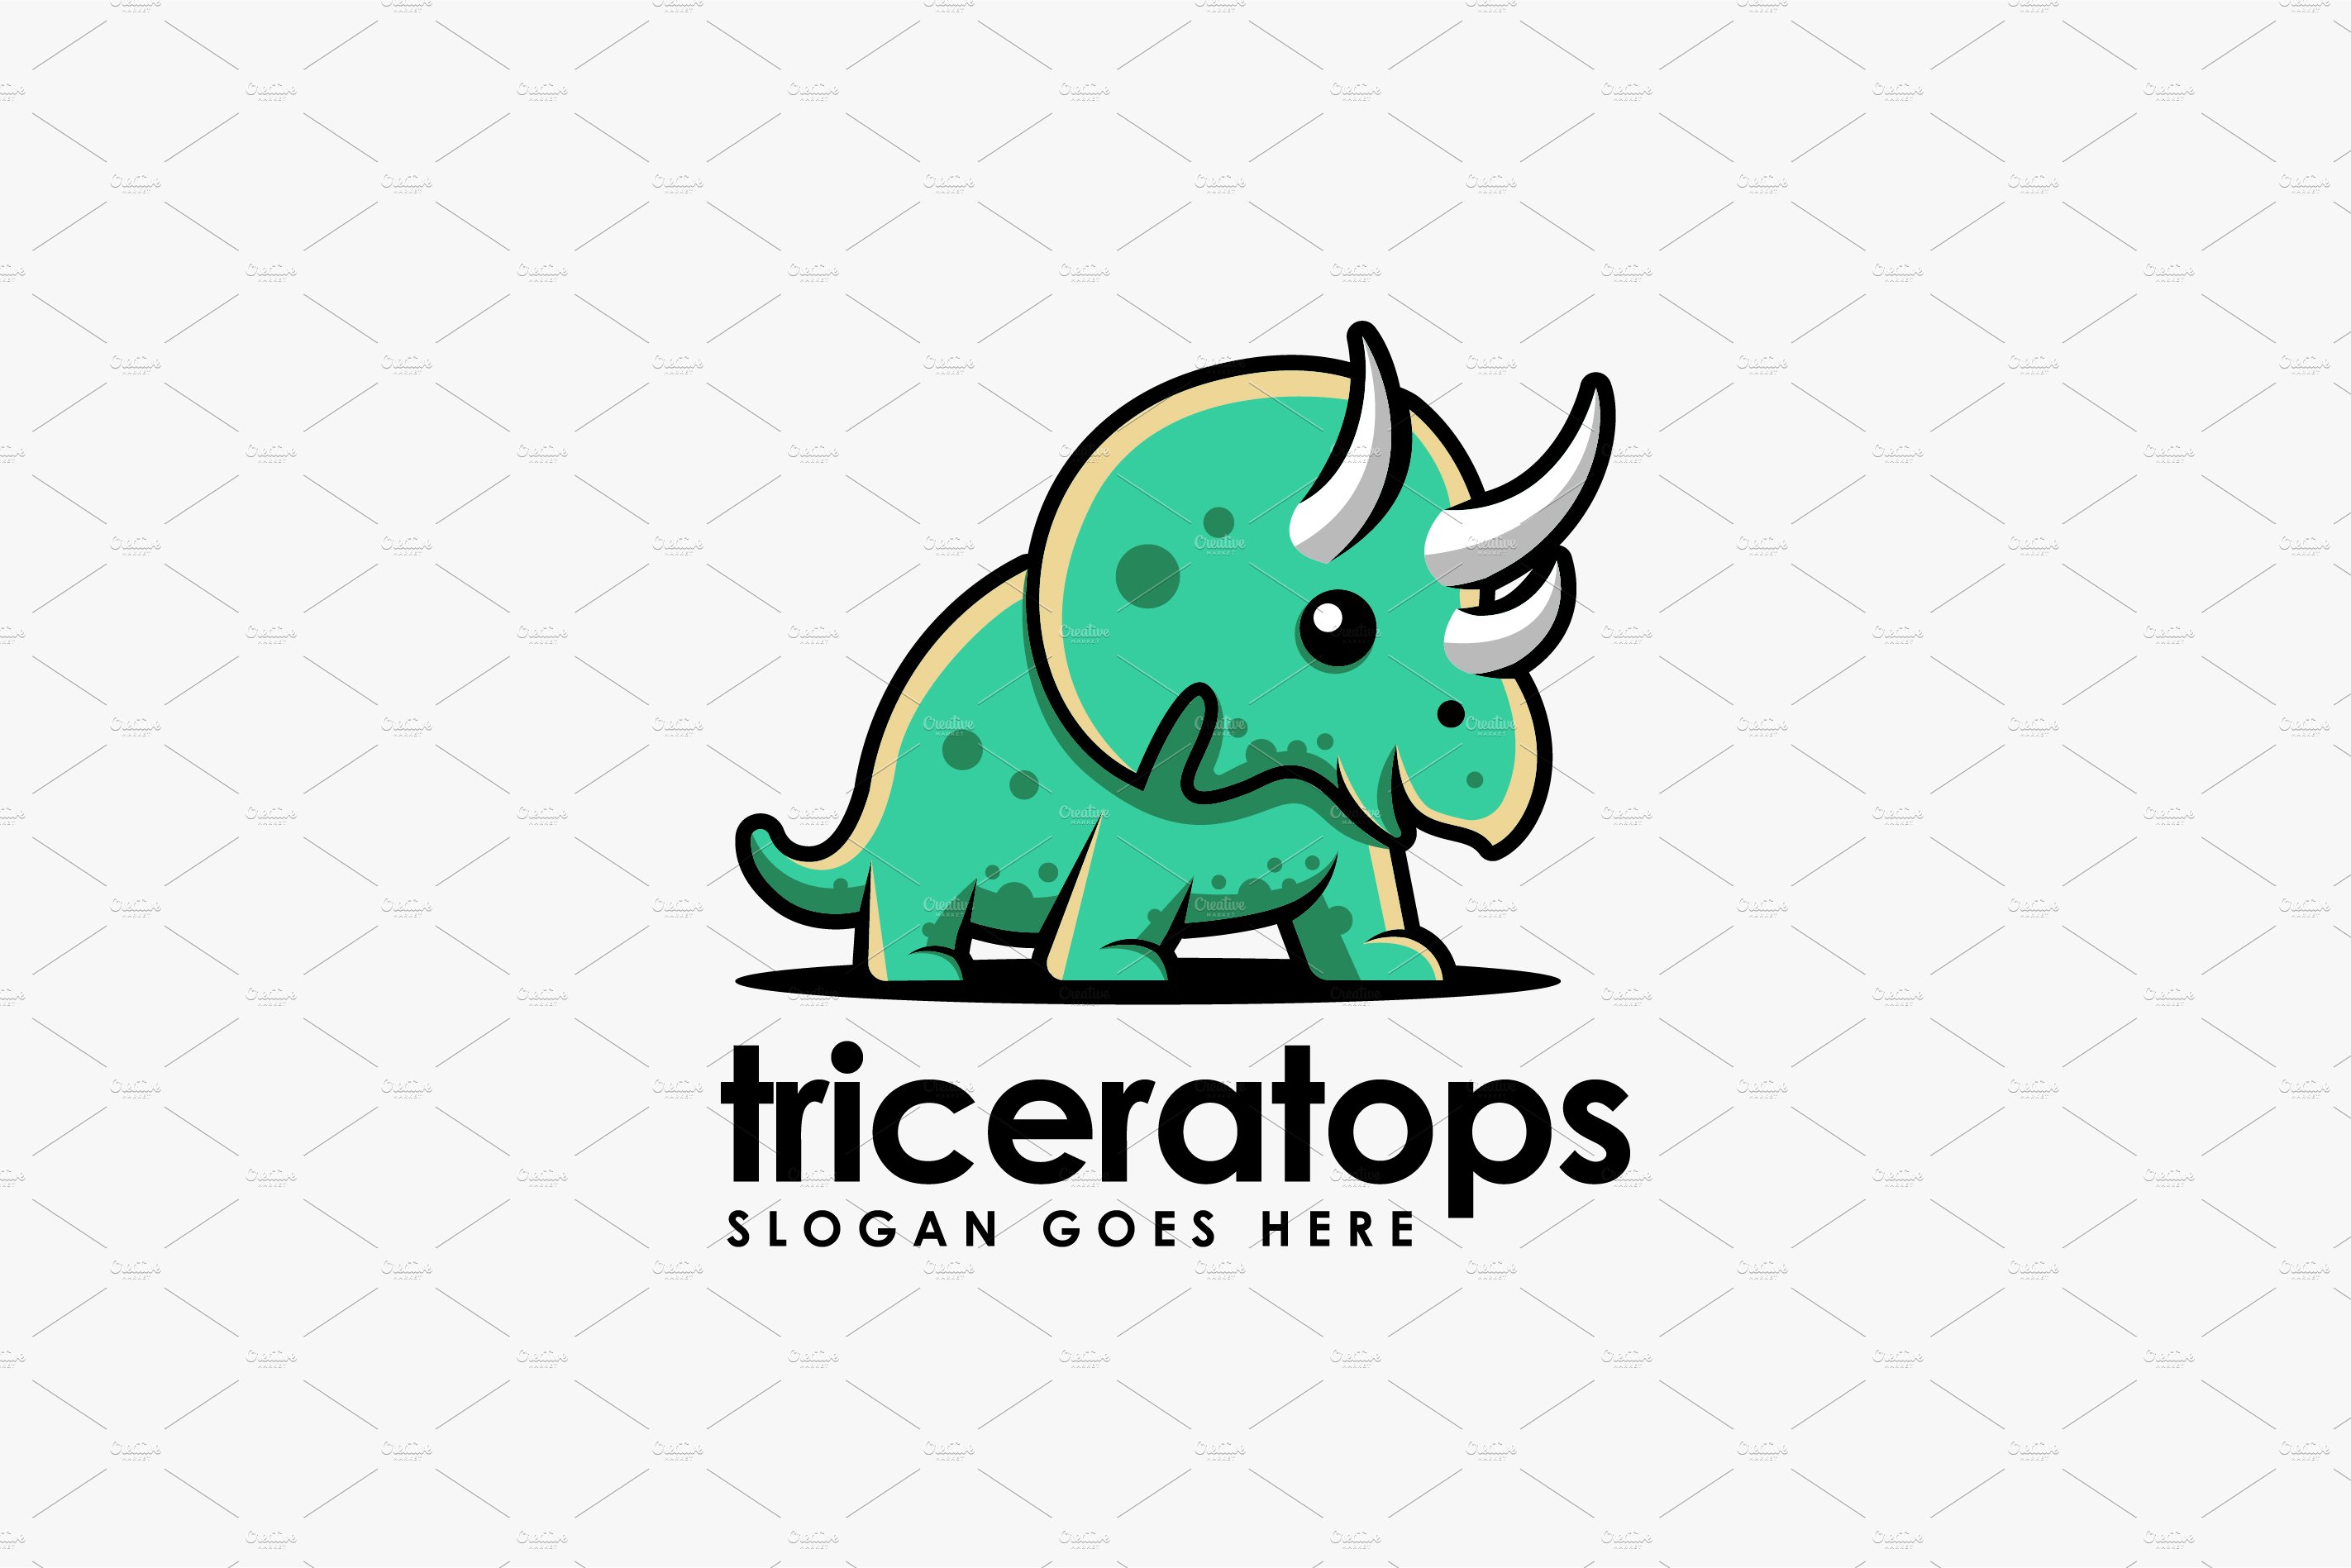 Triceratops Dinosaur logo cartoon cover image.